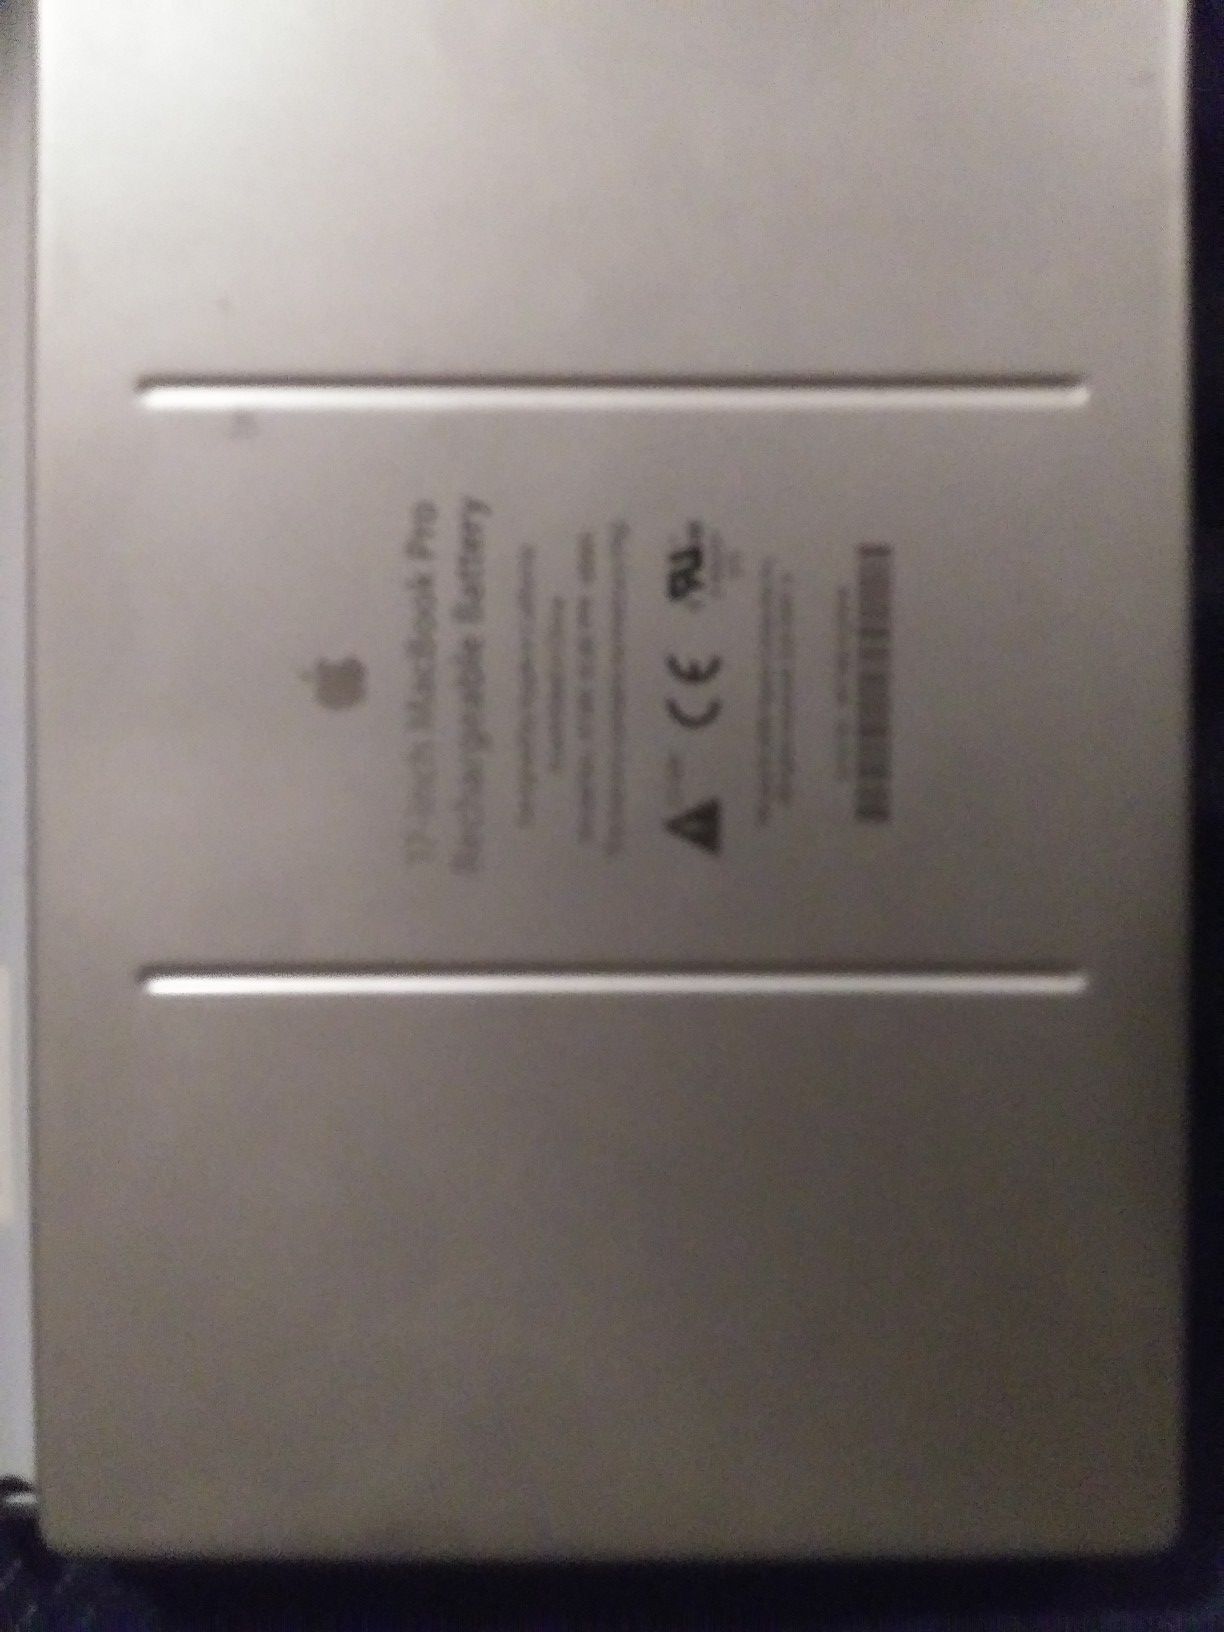 17" MacBook Pro rechargeable battery